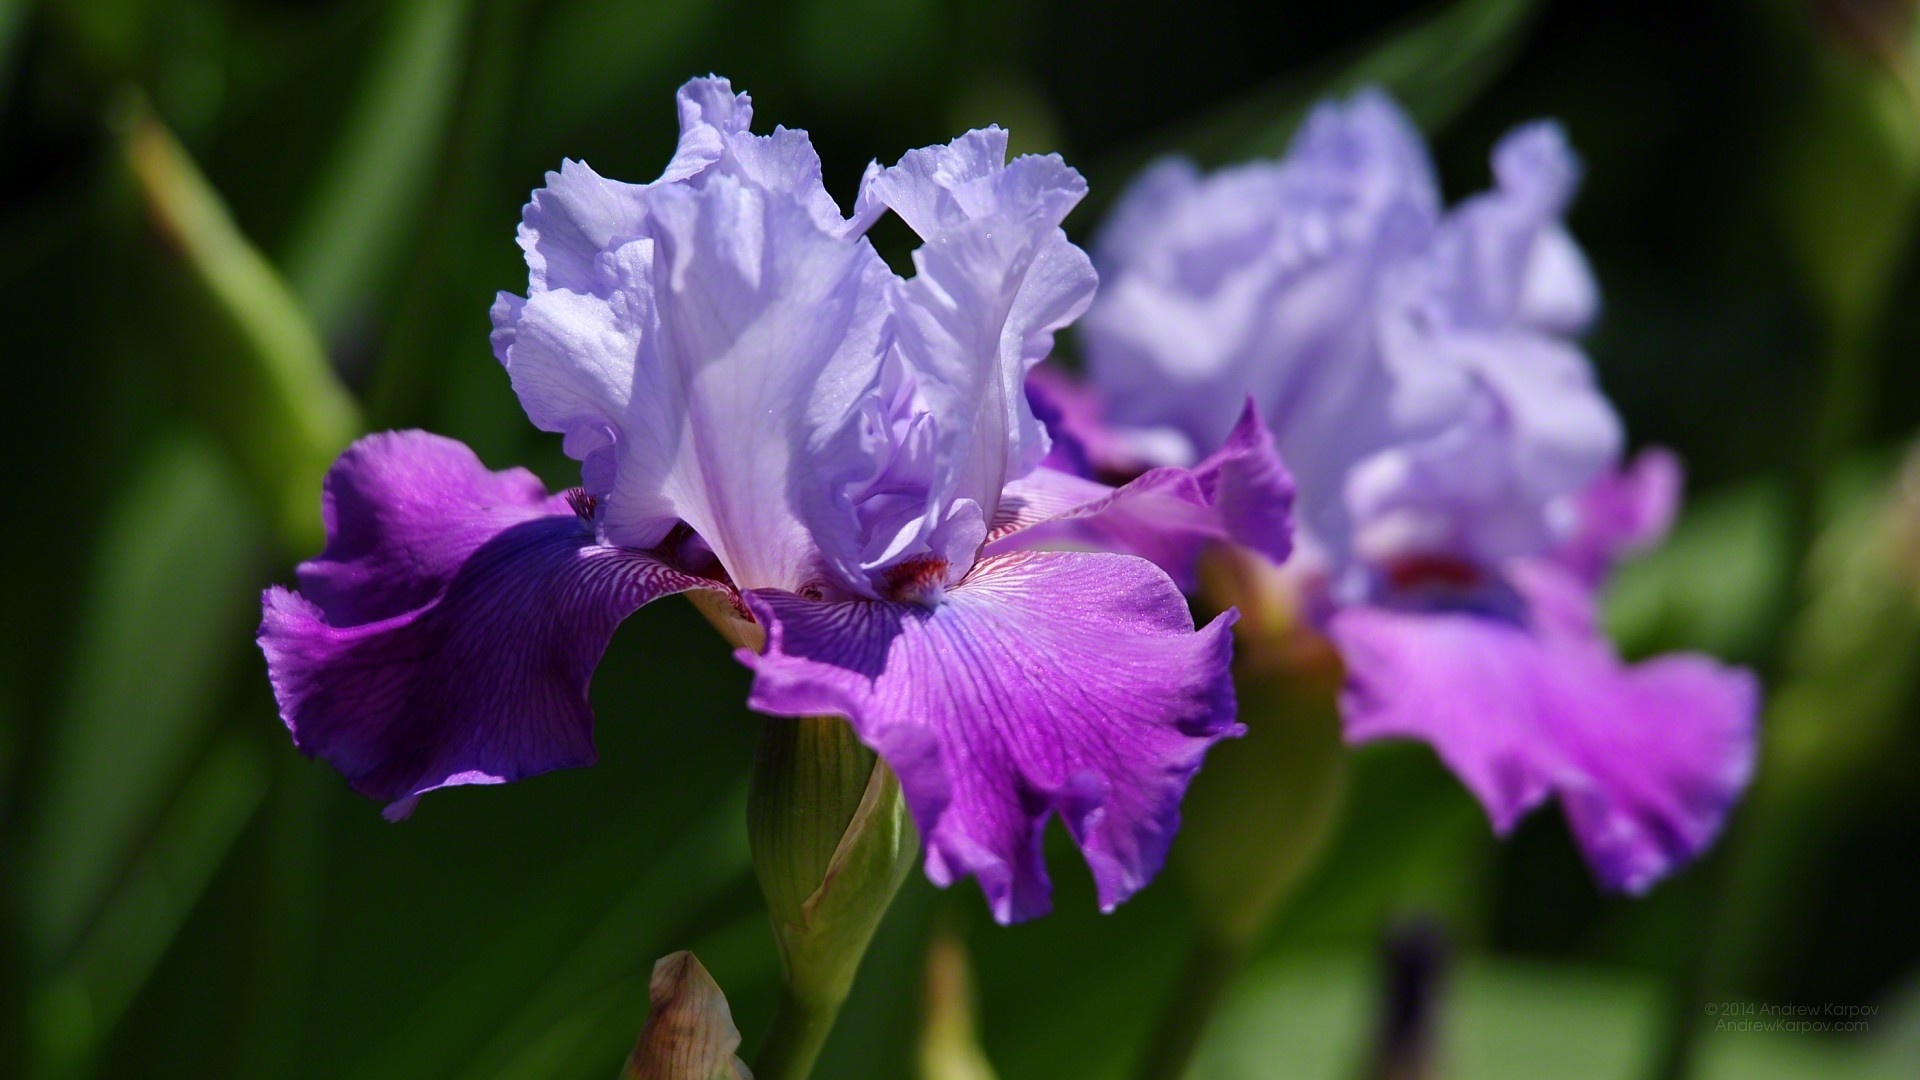 Iris flower wallpaper, Exquisite floral beauty, Captivating blooms, Purple iris charm, 1920x1080 Full HD Desktop